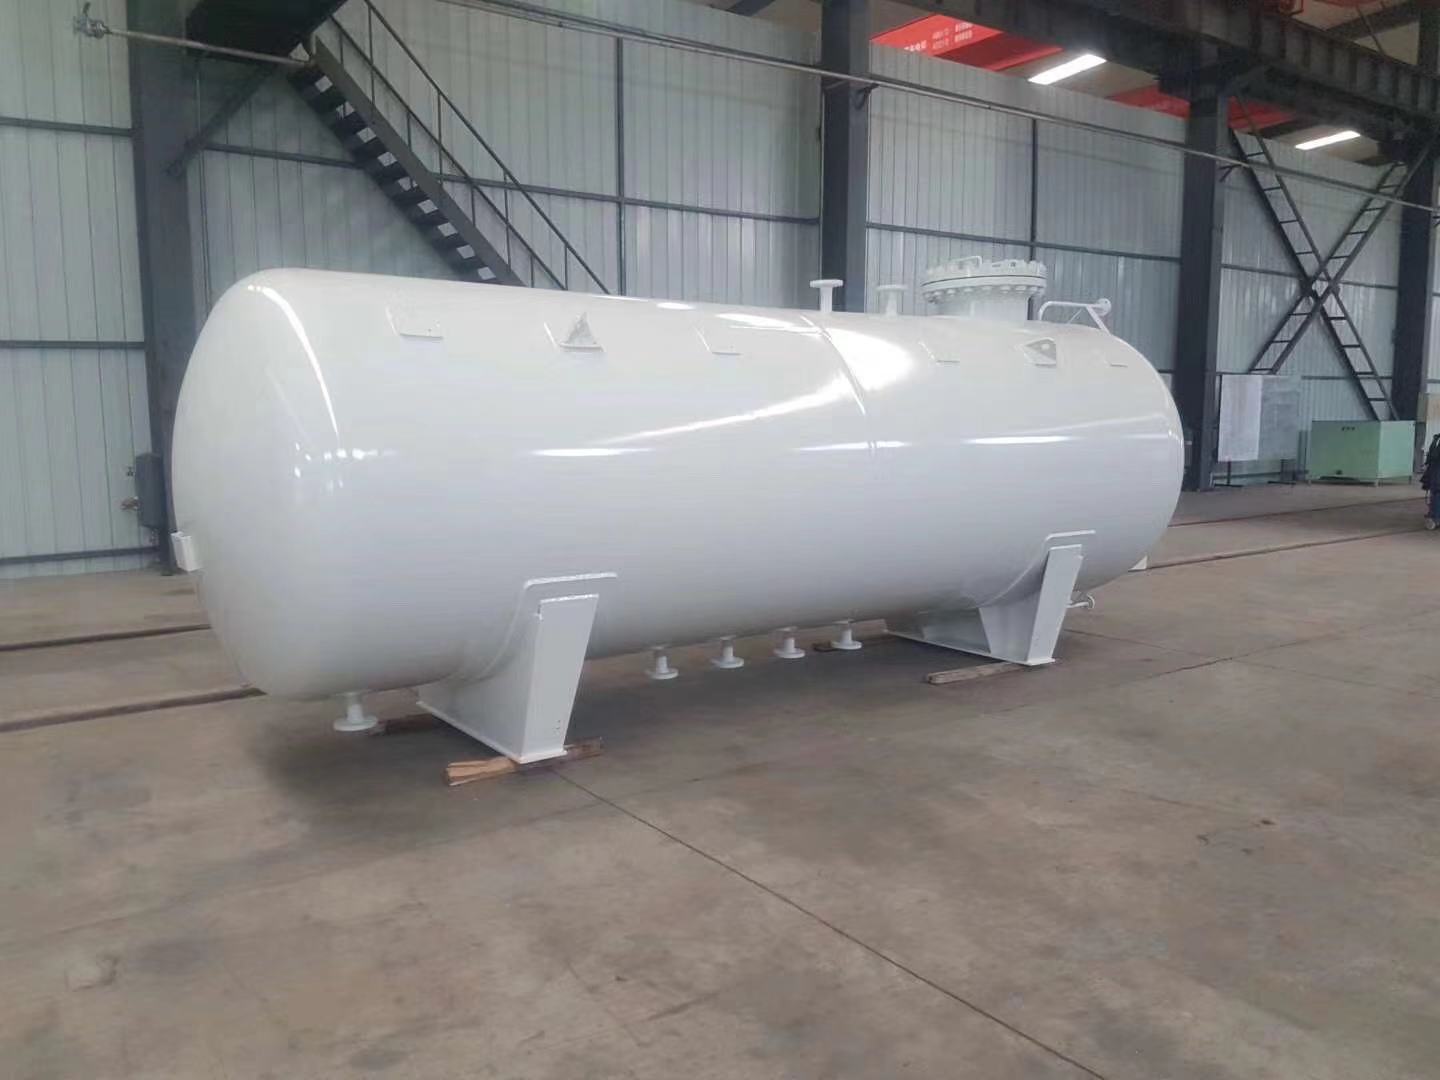 Hydraulic pressure test of LPG storage tanks